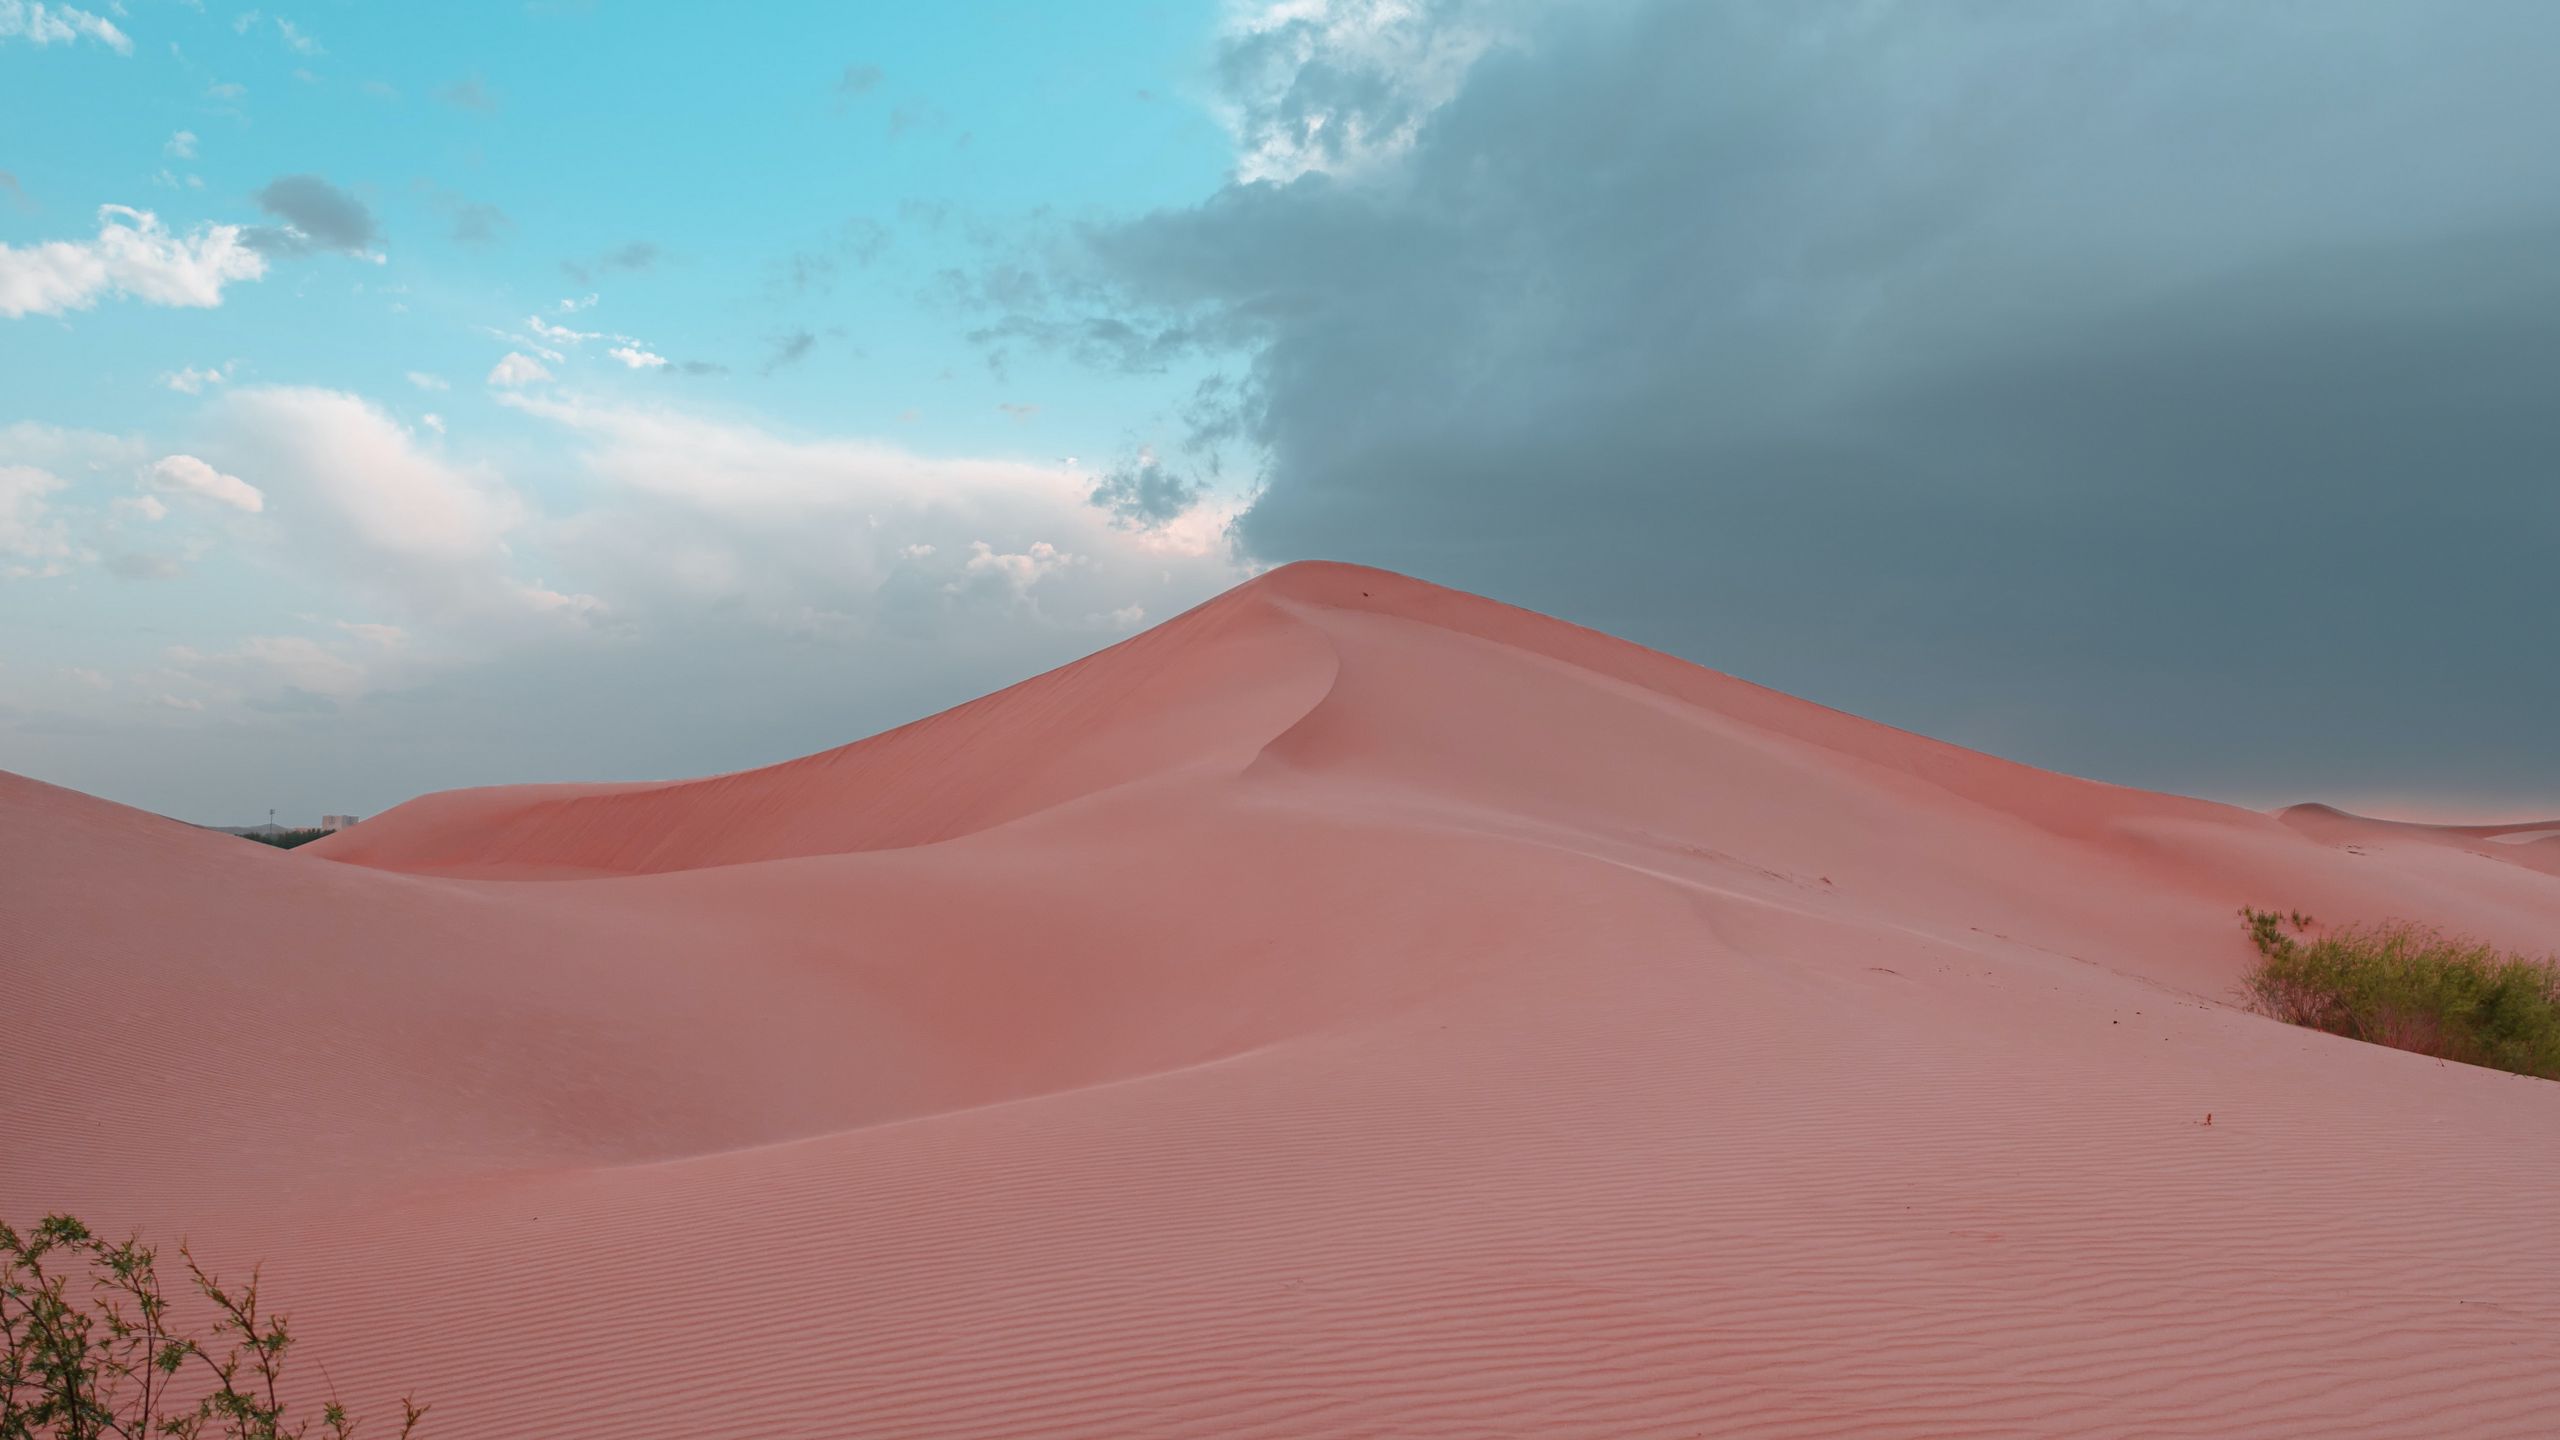 Download Wallpaper 2560x1440 Desert Hill Sand Dunes Bushes